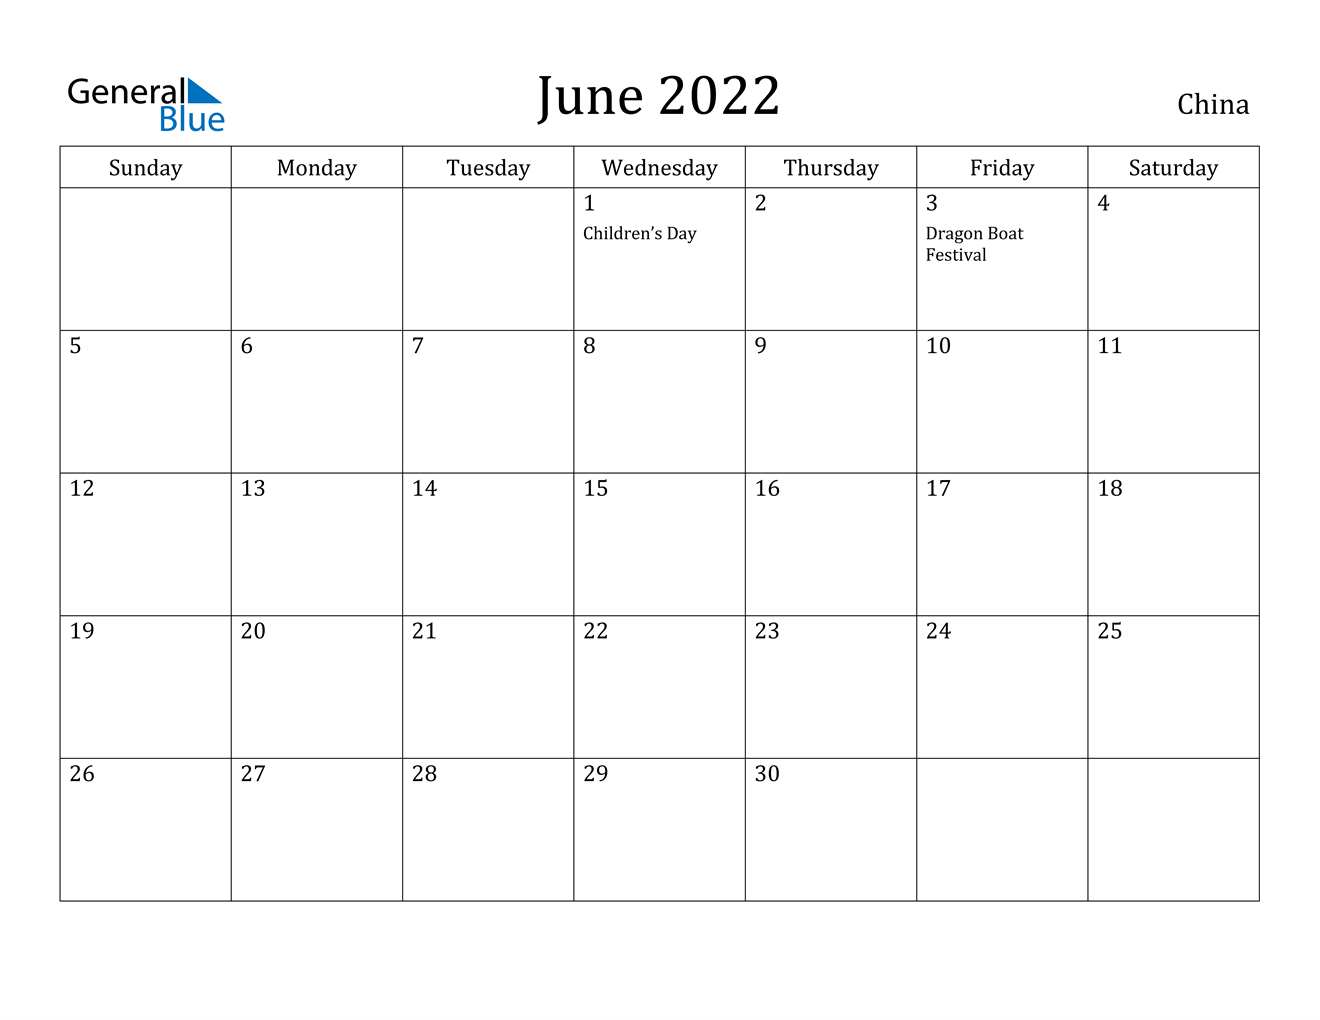 June 2022 Calendar - China